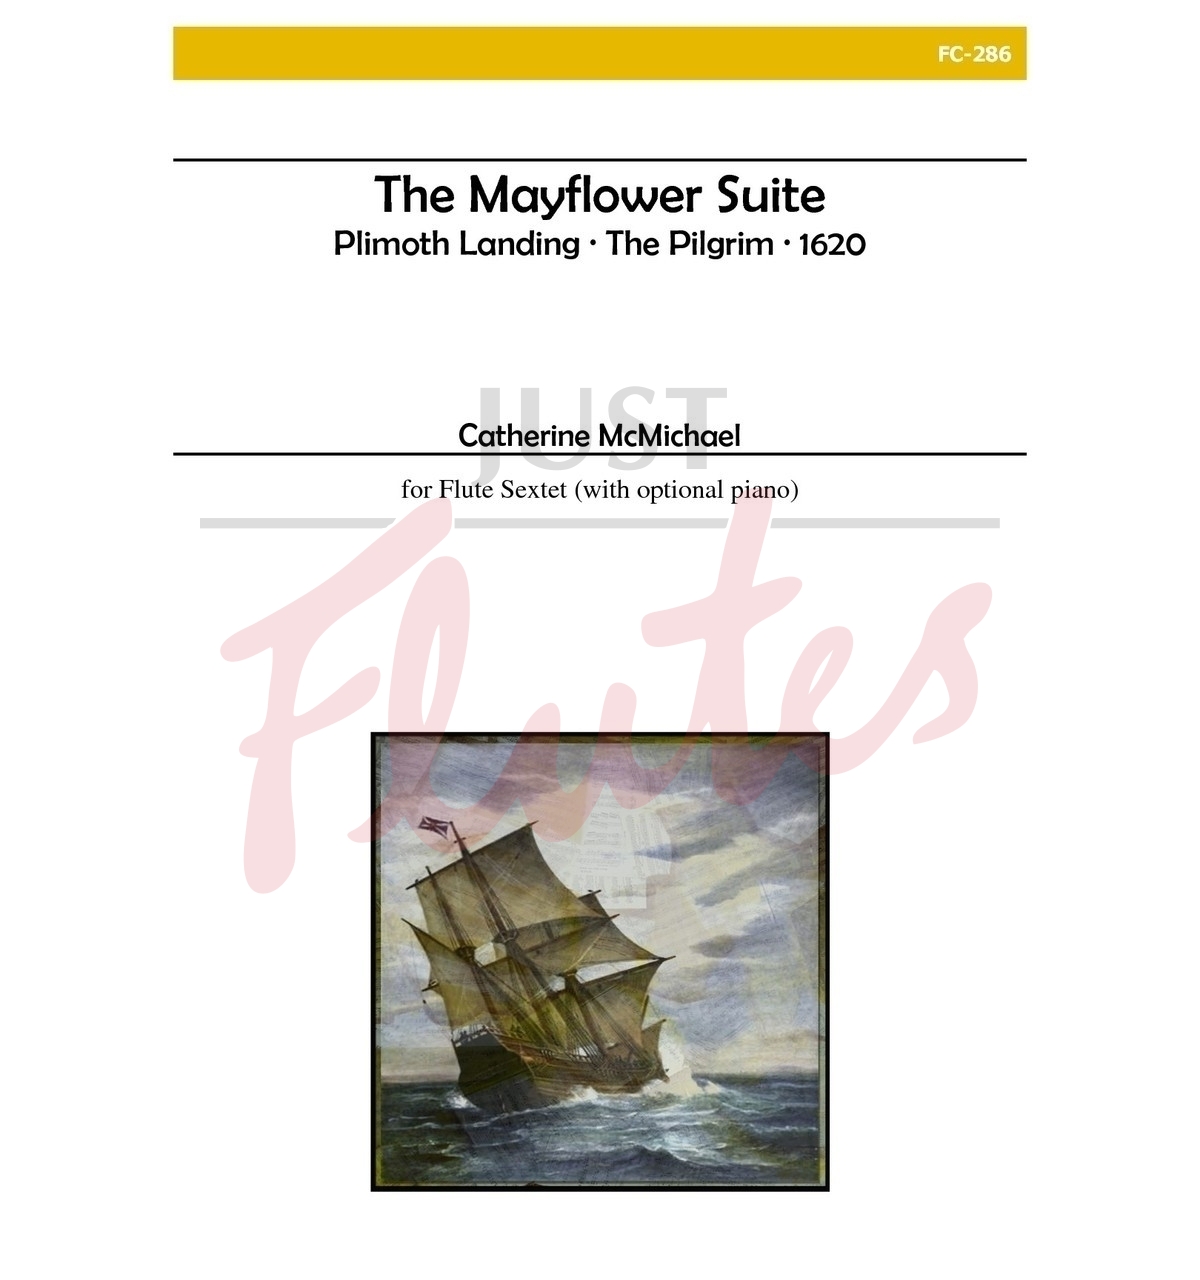 The Mayflower Suite - Plymouth Landing The Pilgrim 1620)